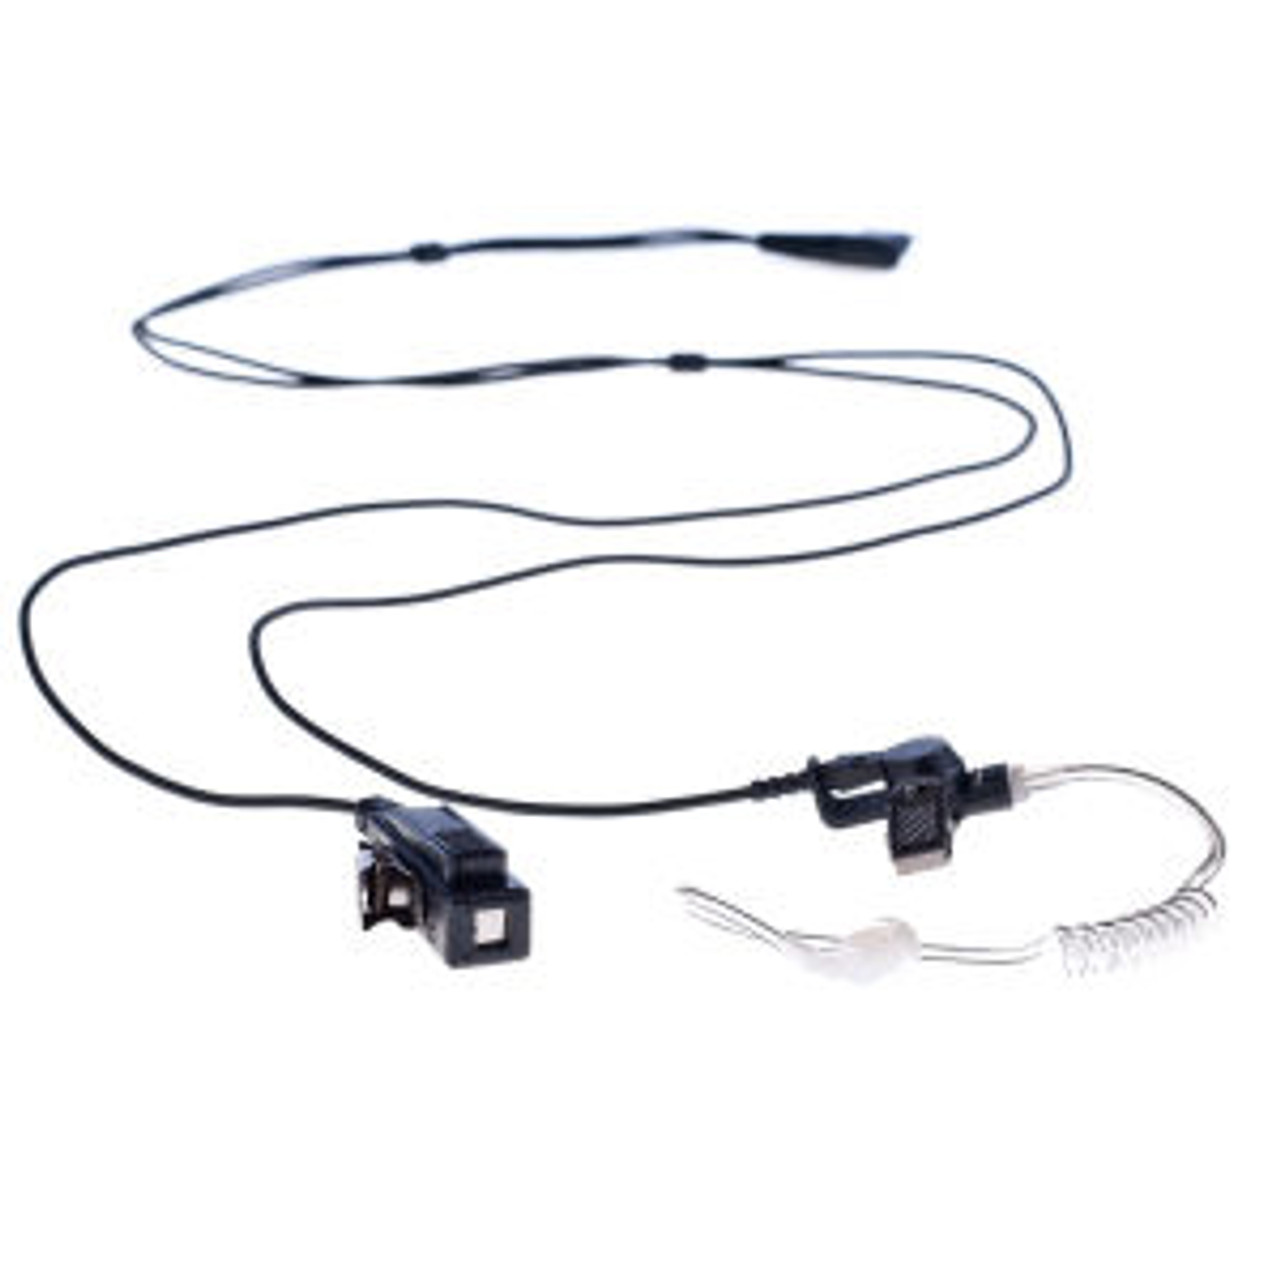 Kenwood TK-5430 2-Wire Surveillance Kit